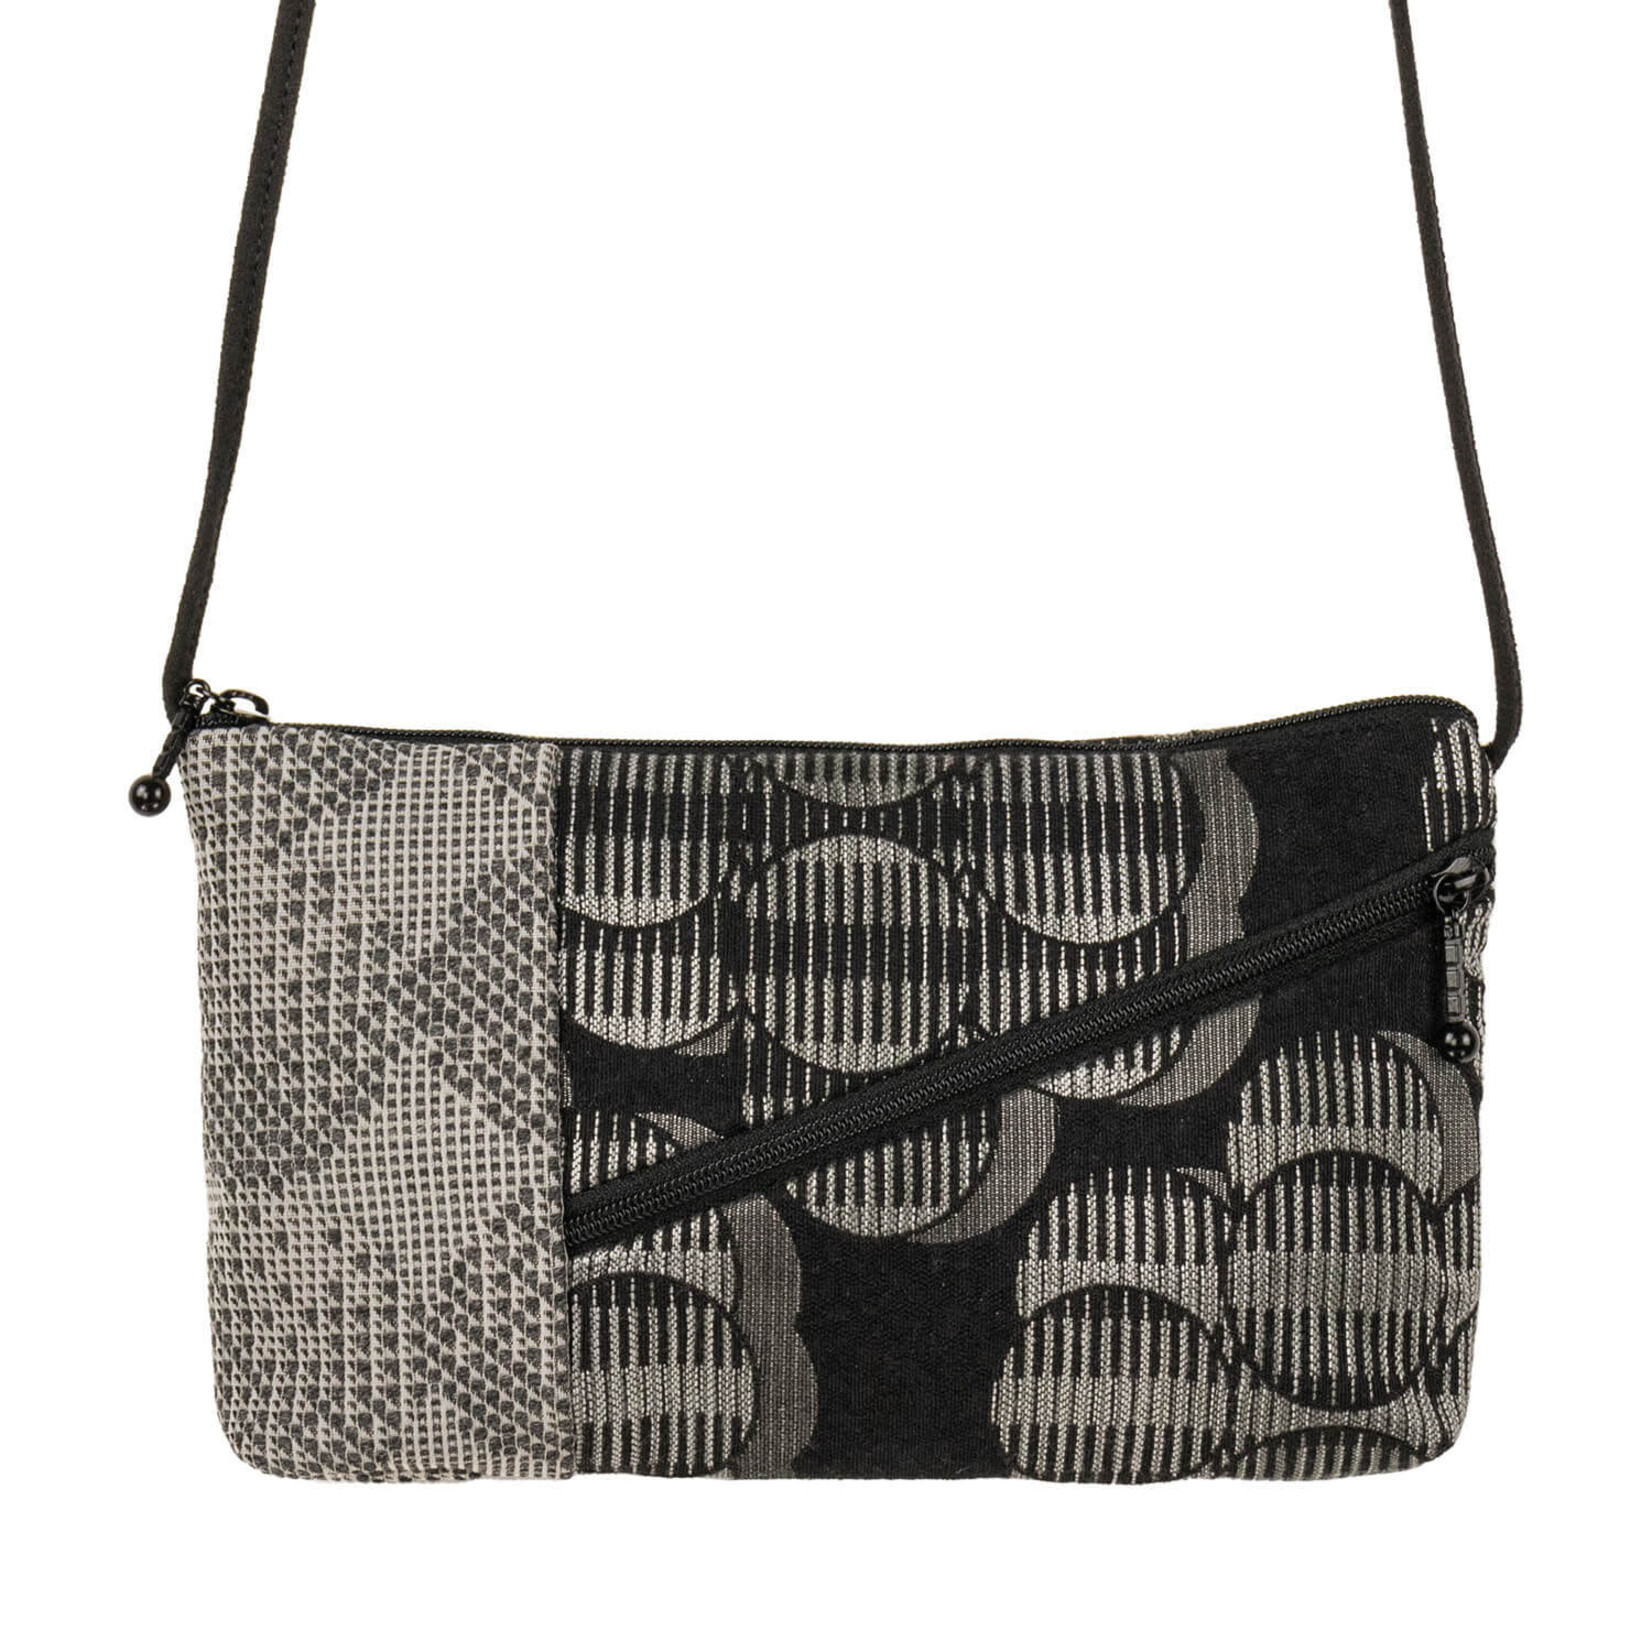 Maruca Design Tomboy Bag